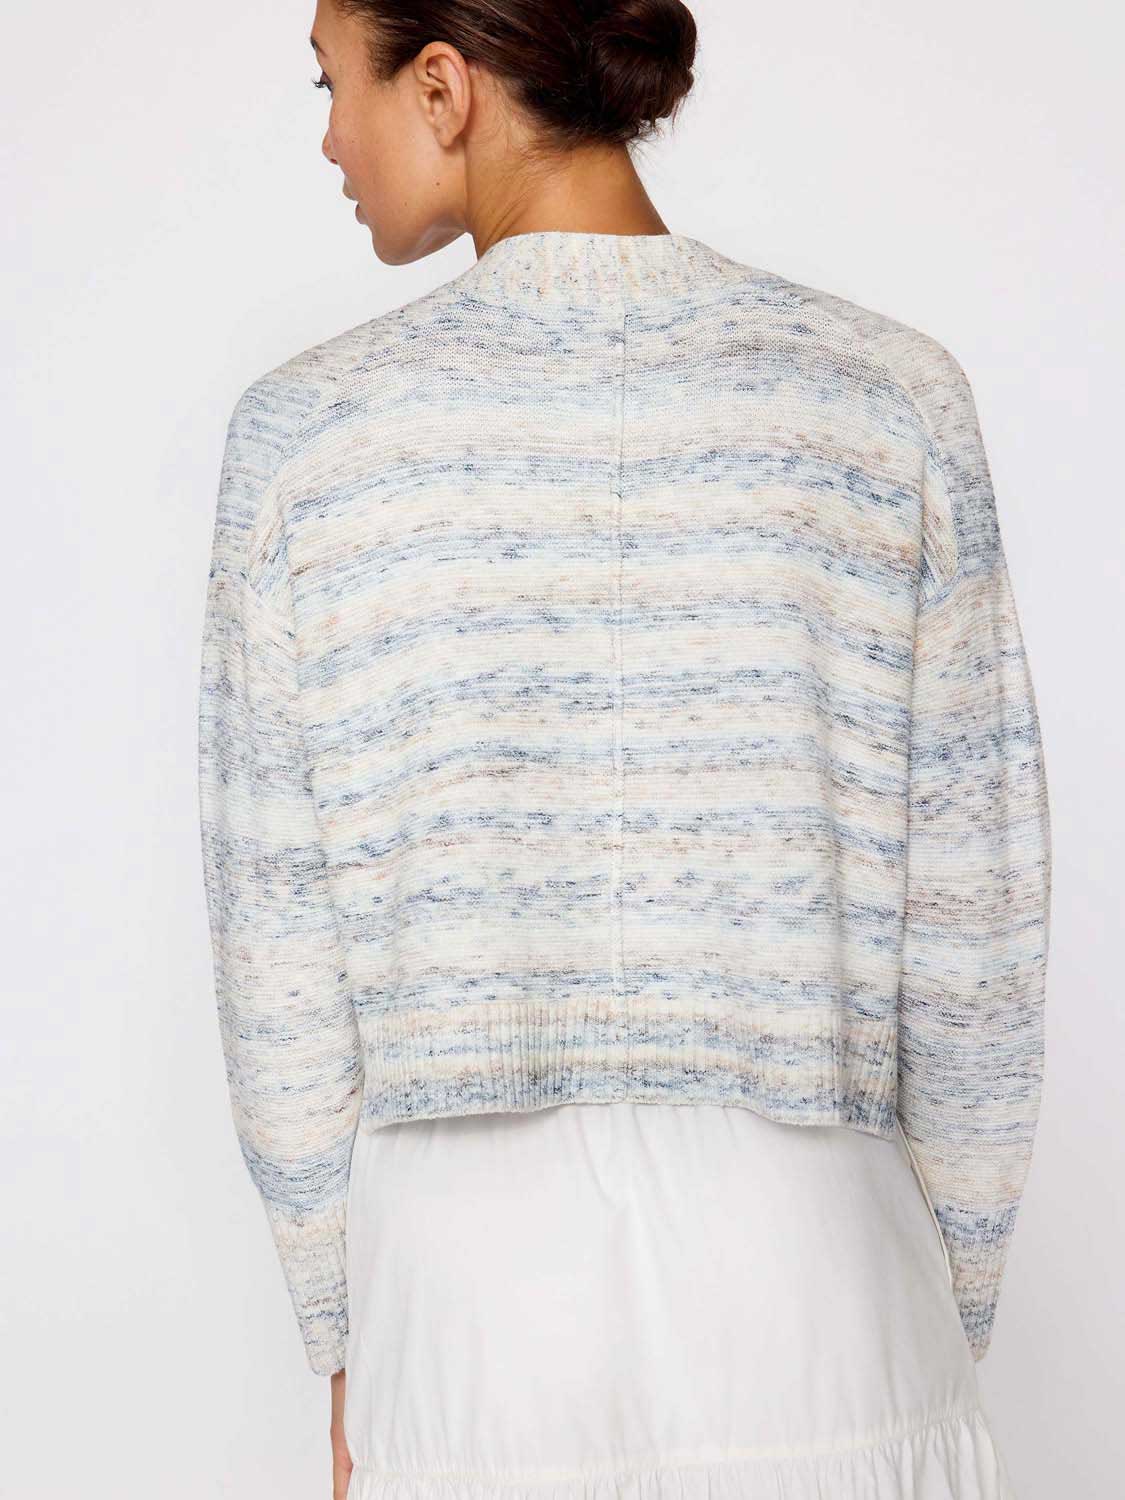 Tessa blue stripe cropped cardigan sweater back view